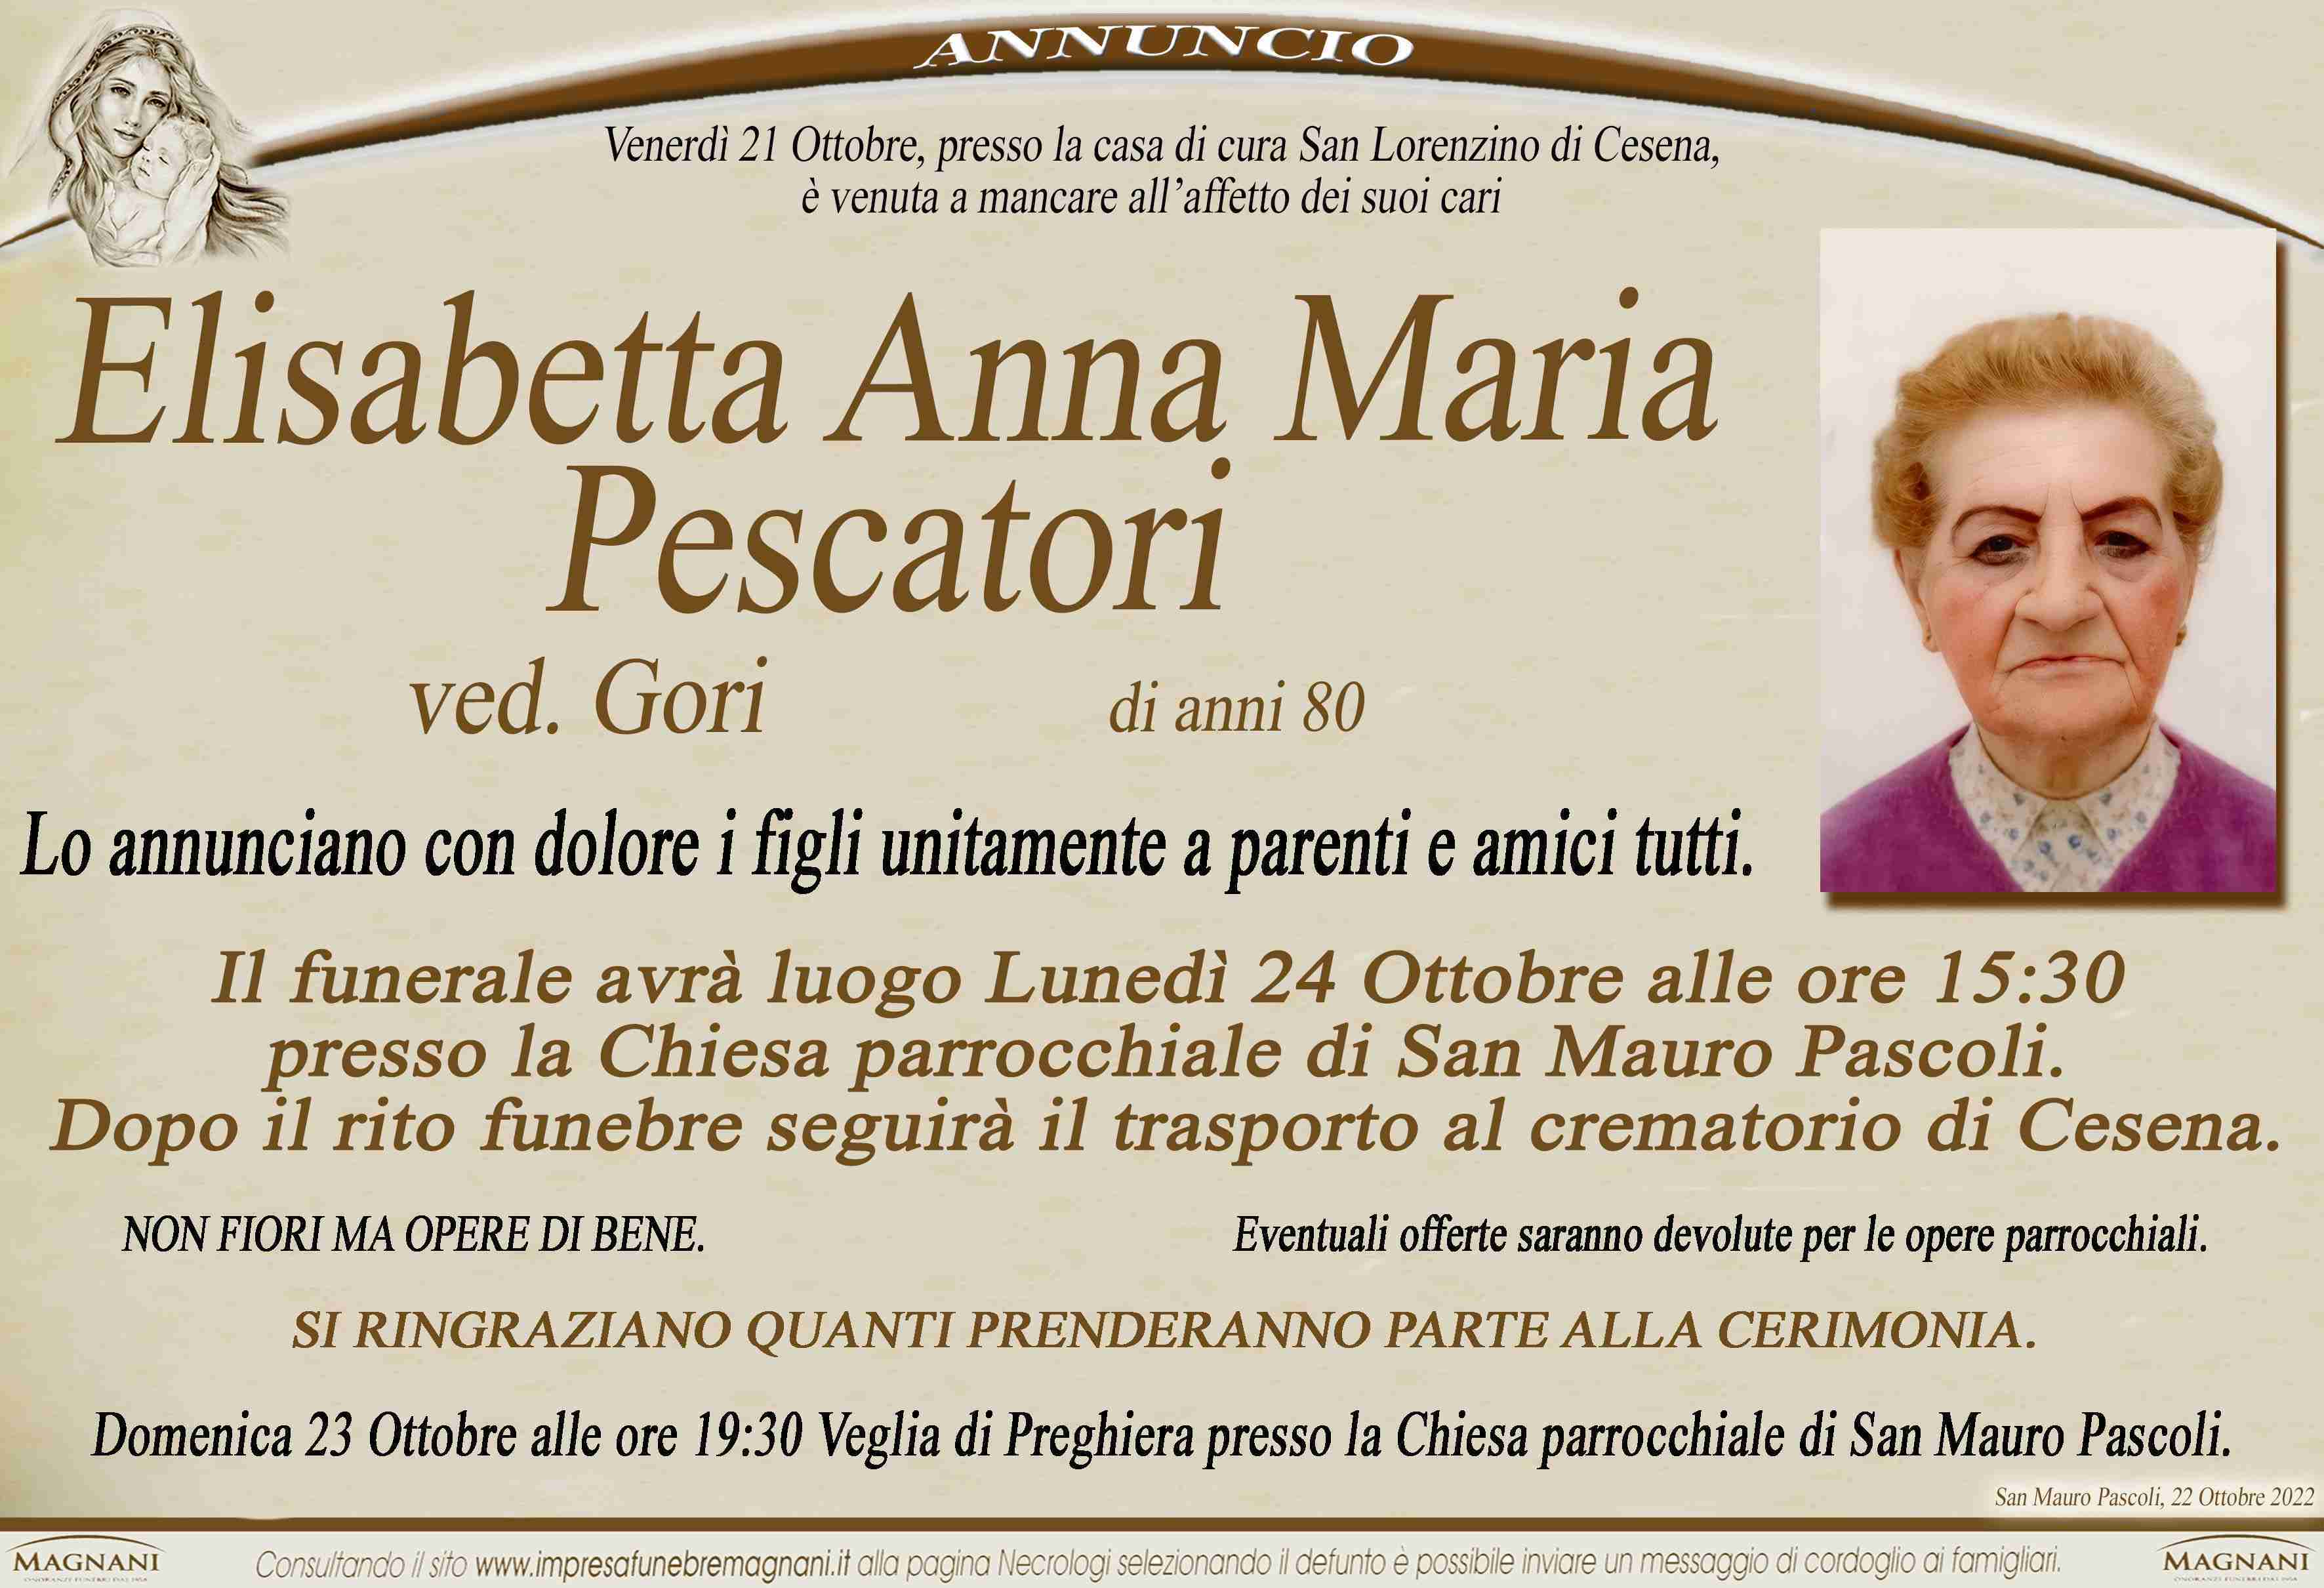 Elisabetta Anna Maria Pescatori